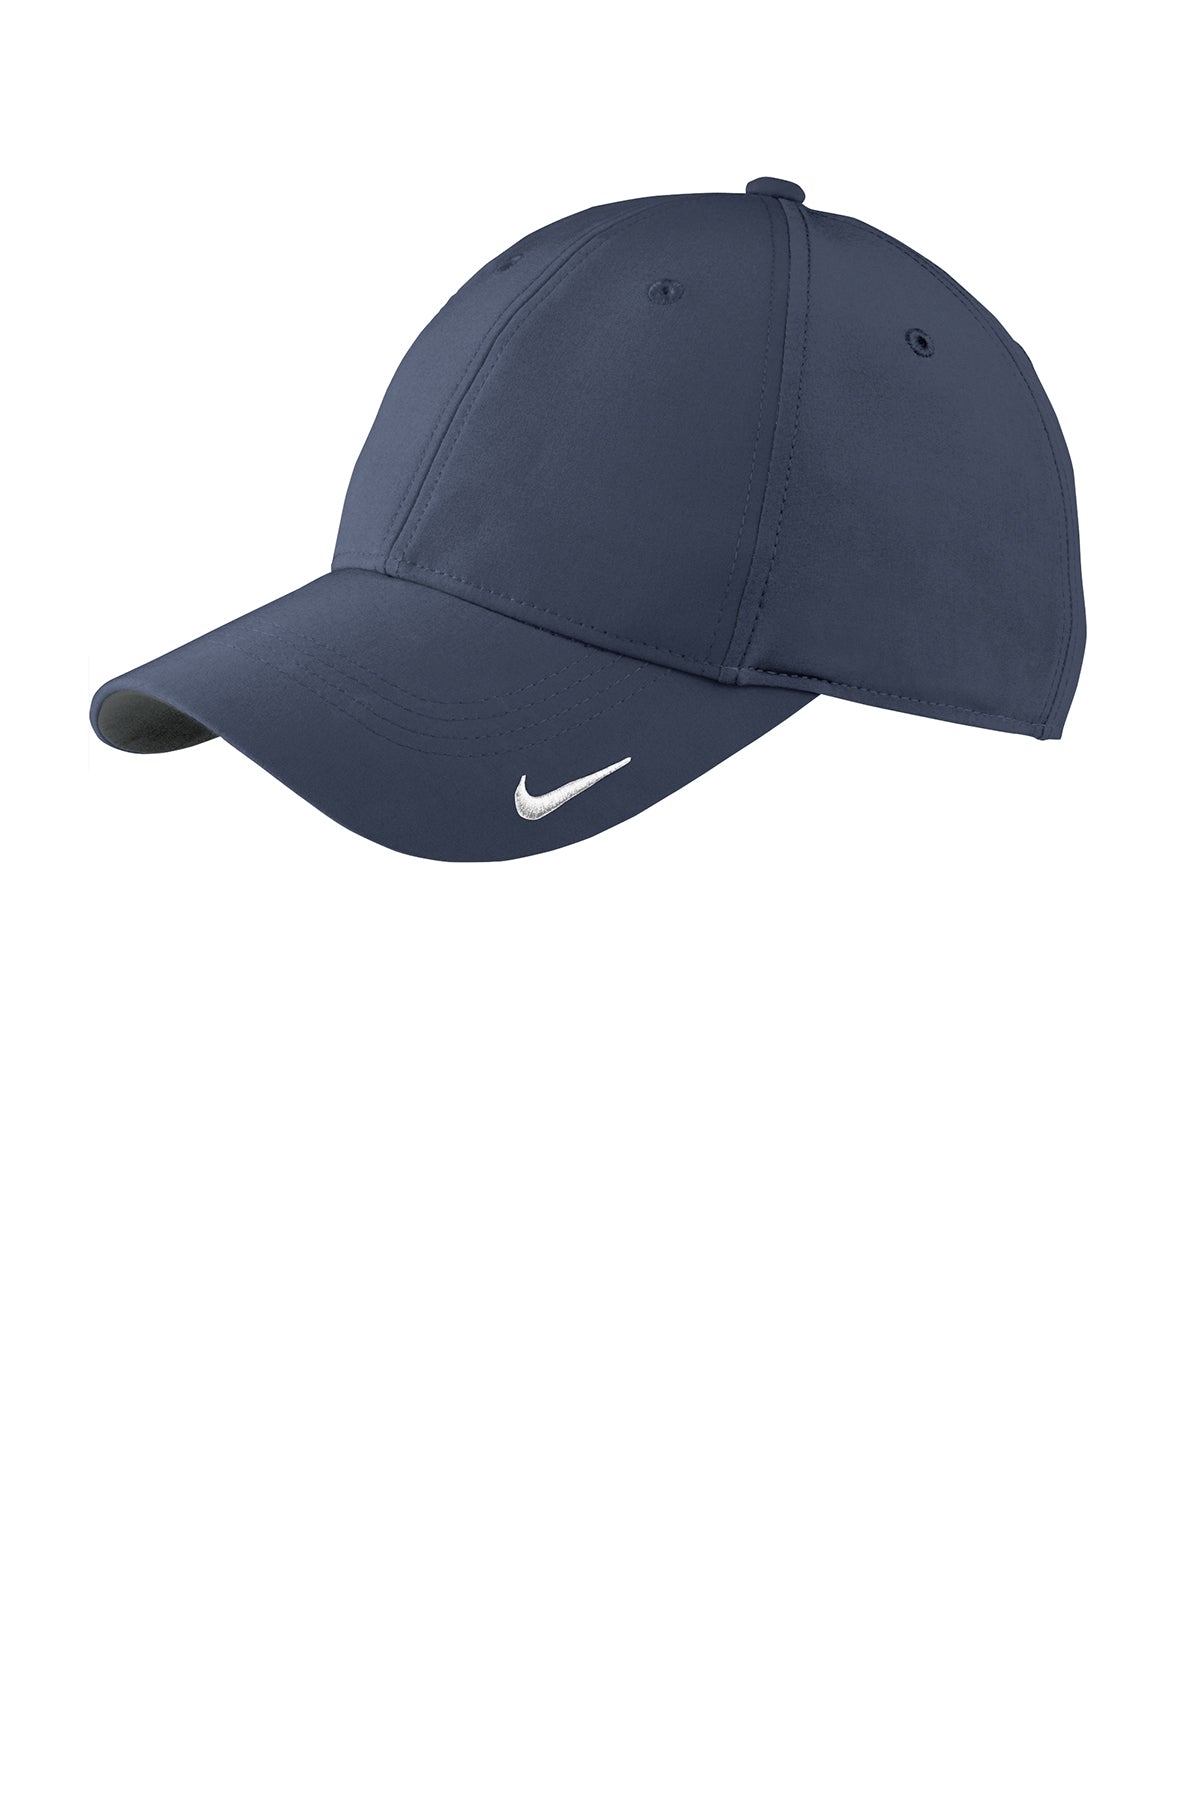 Nike Dri-FIT Legacy Customized Caps, Navy